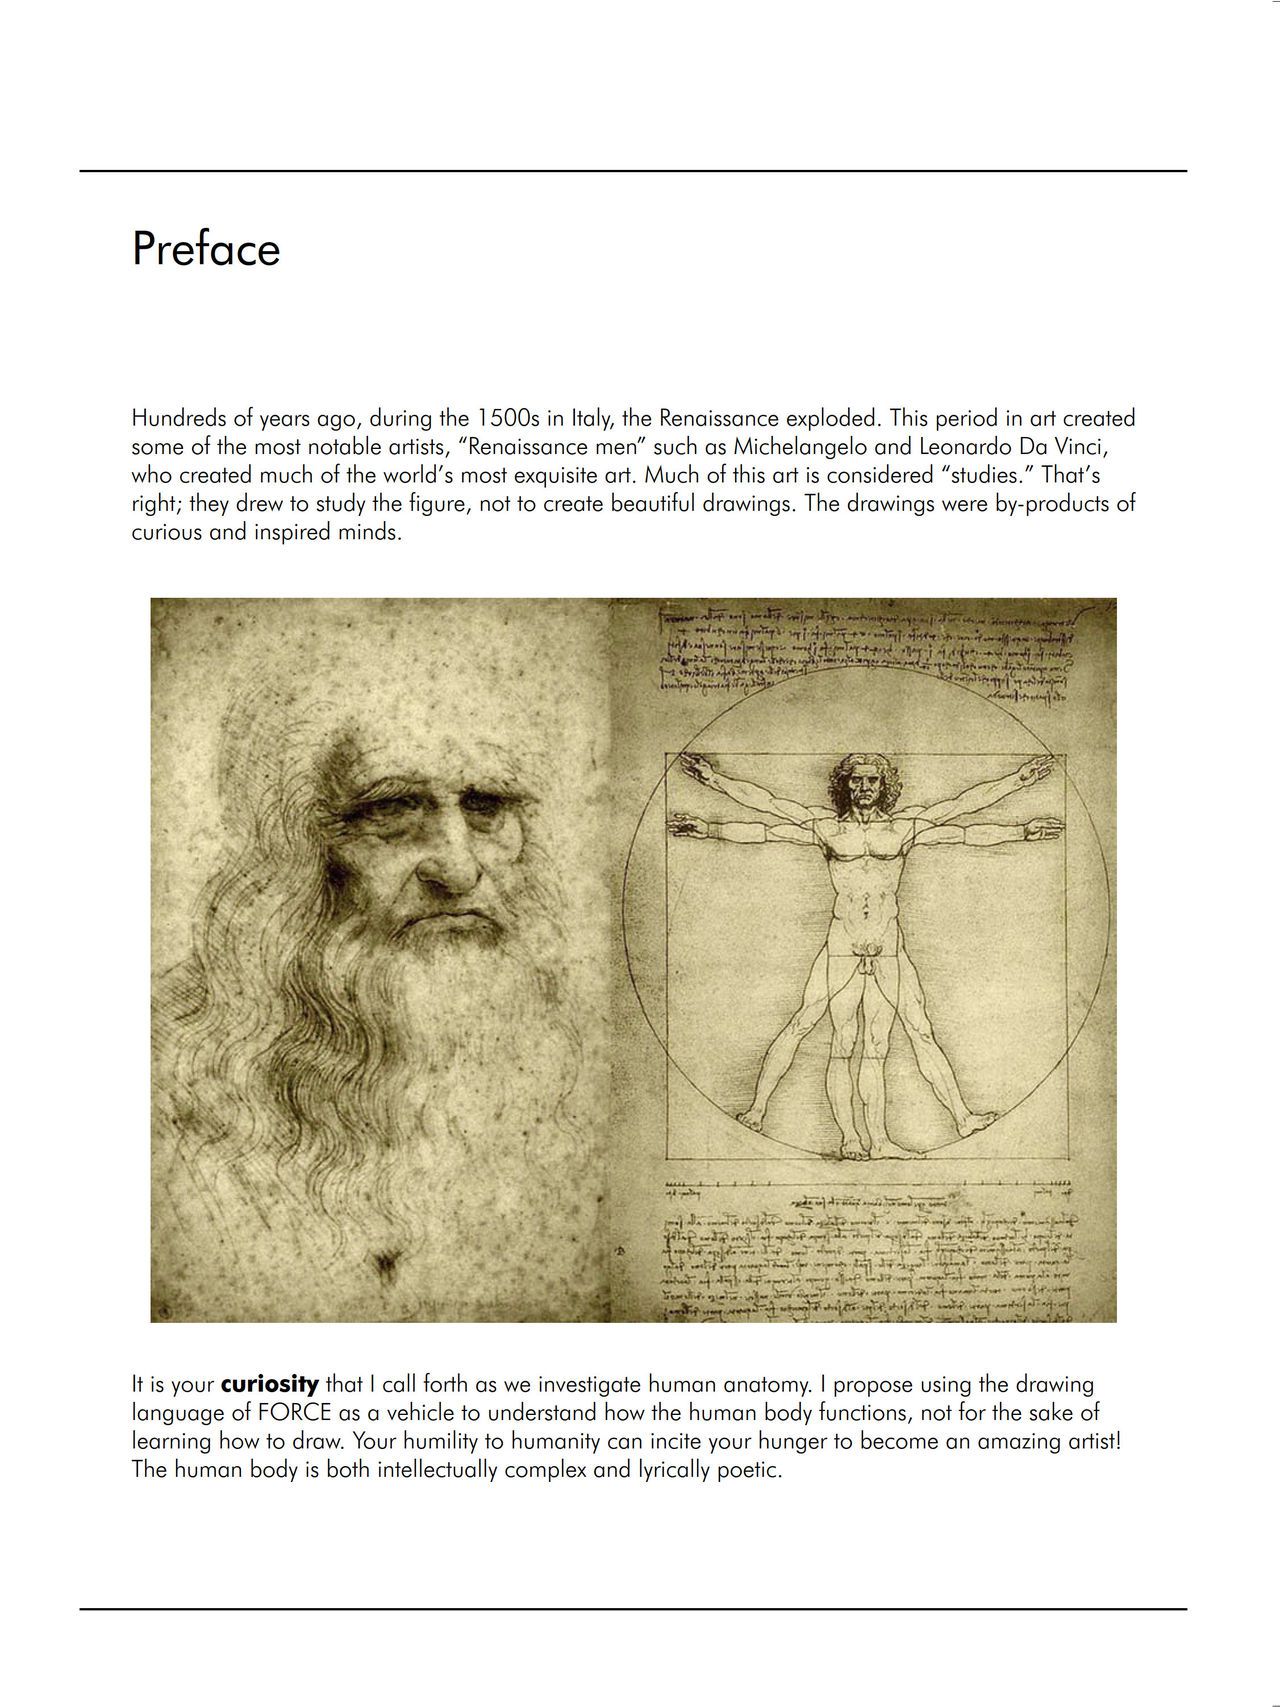 Force. Drawing human anatomy - Michael D. Mattesi [Digital] 14